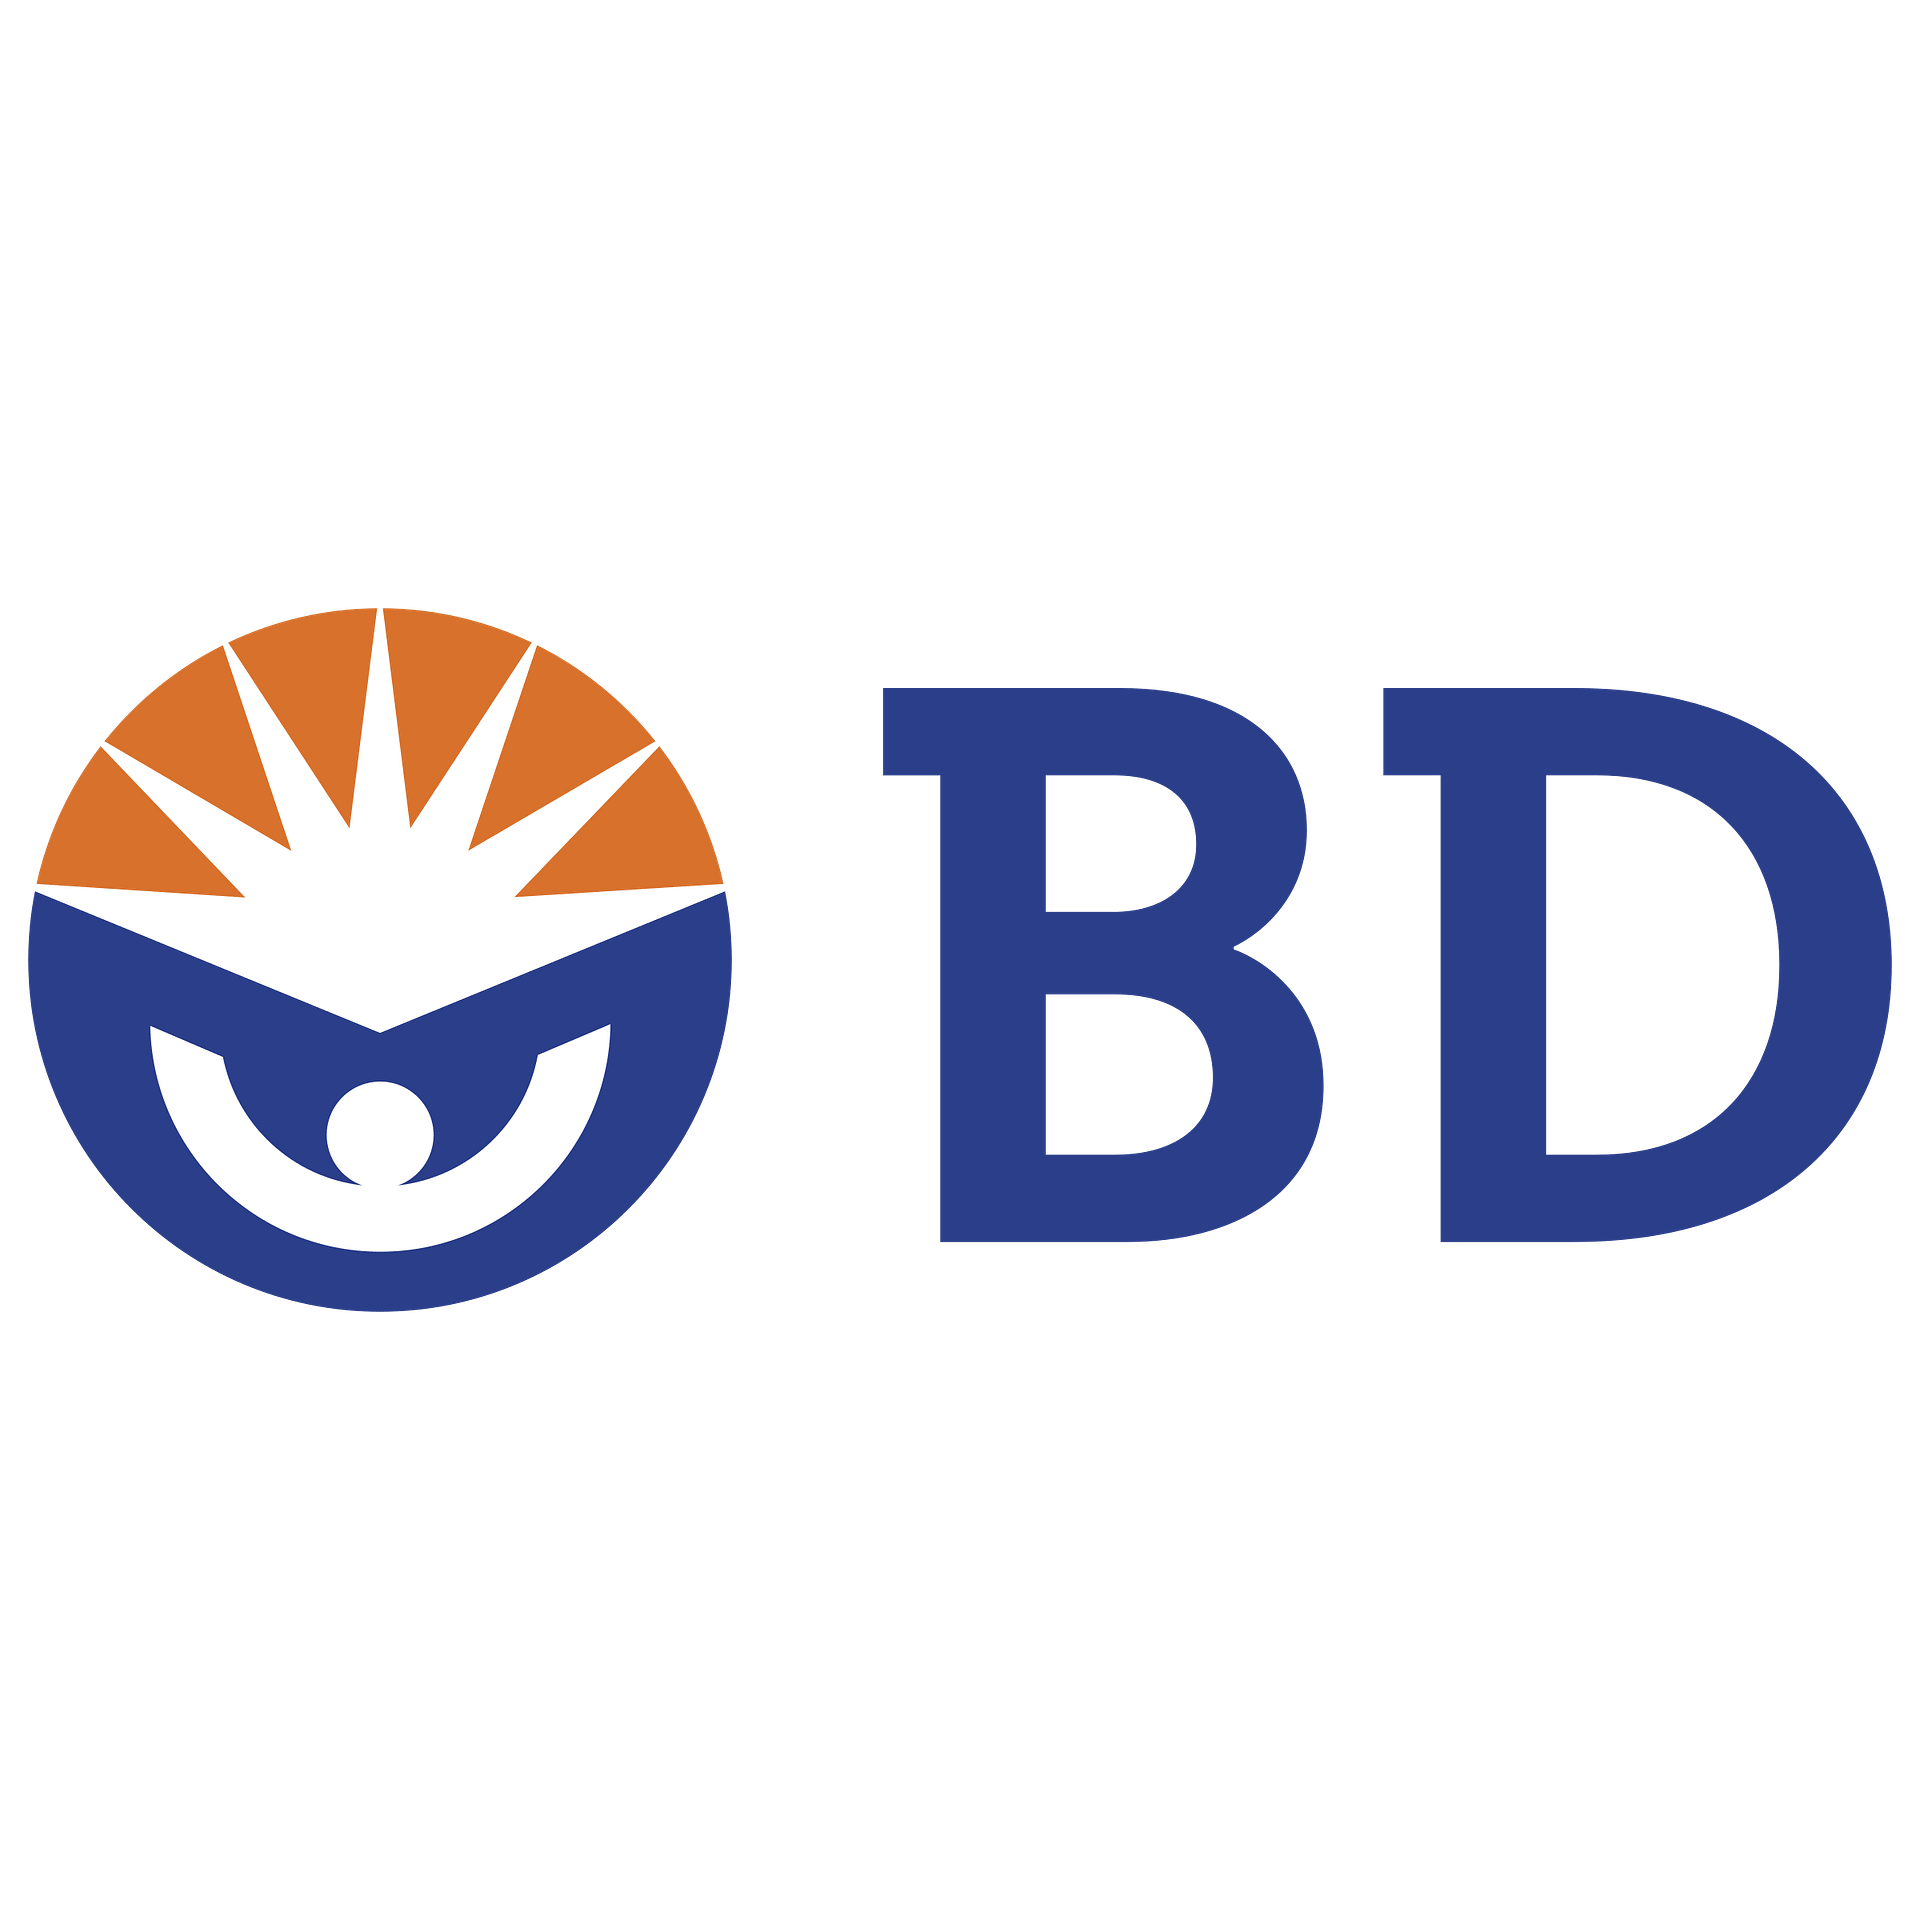 bd logo png transparent